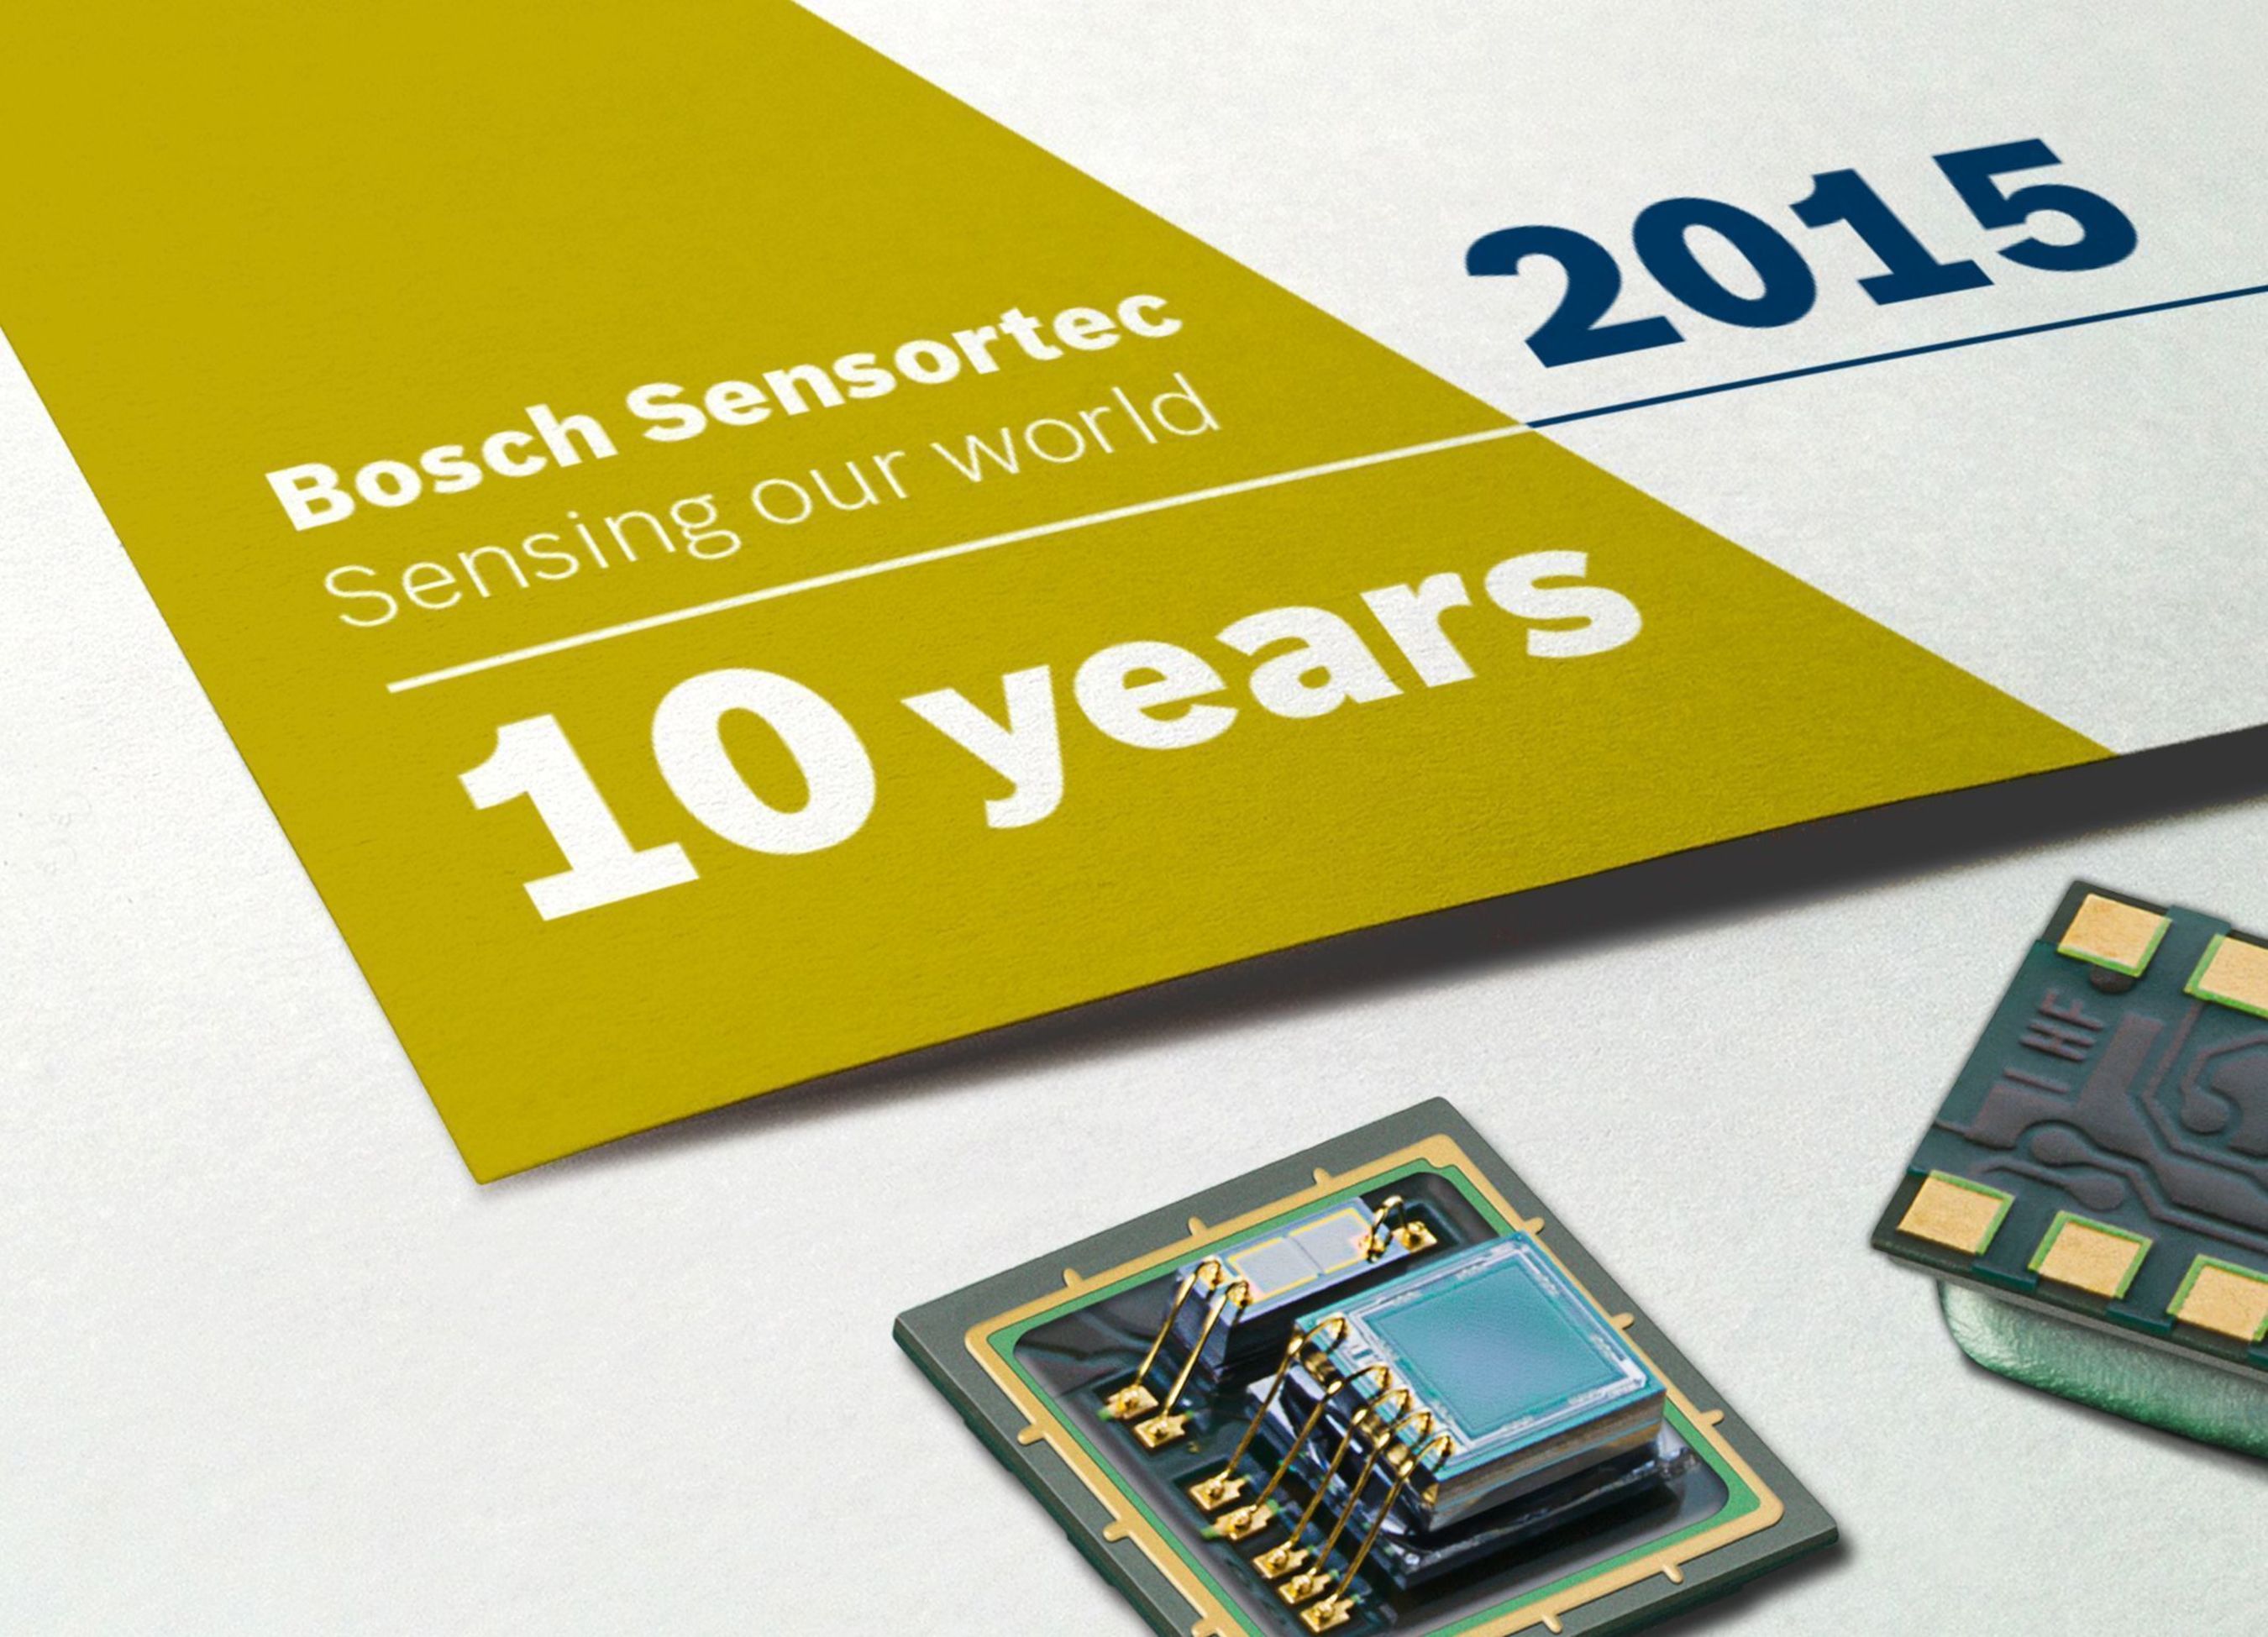 Bosch Sensortec: 10 years of MEMS sensors innovation MEMS sensors are a key technology for the connected world (PRNewsFoto/Bosch Sensortec)